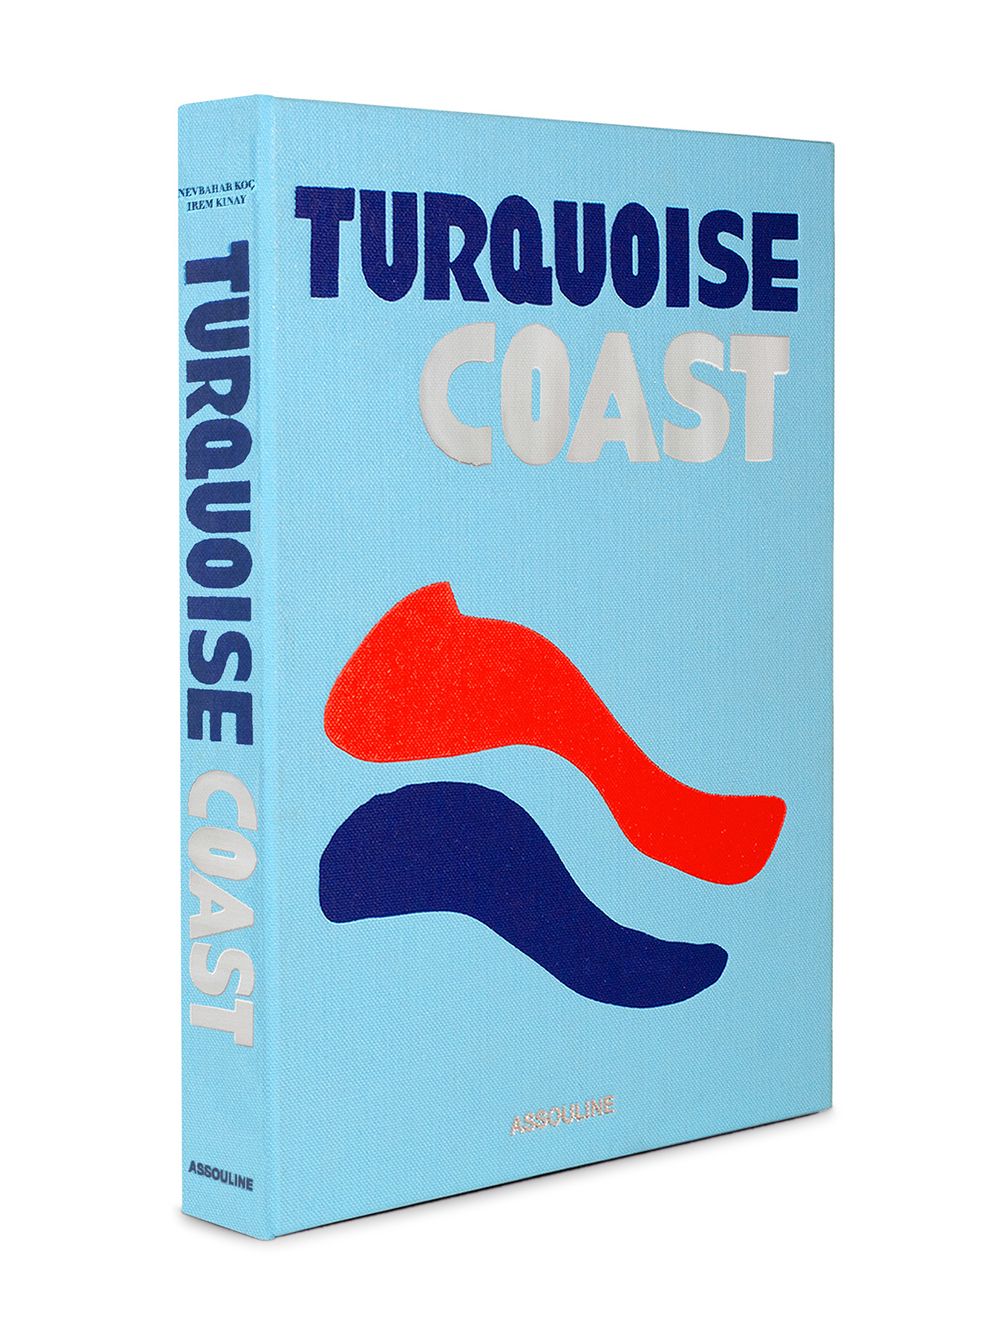 TURQUOISE COAST BOOK - $95